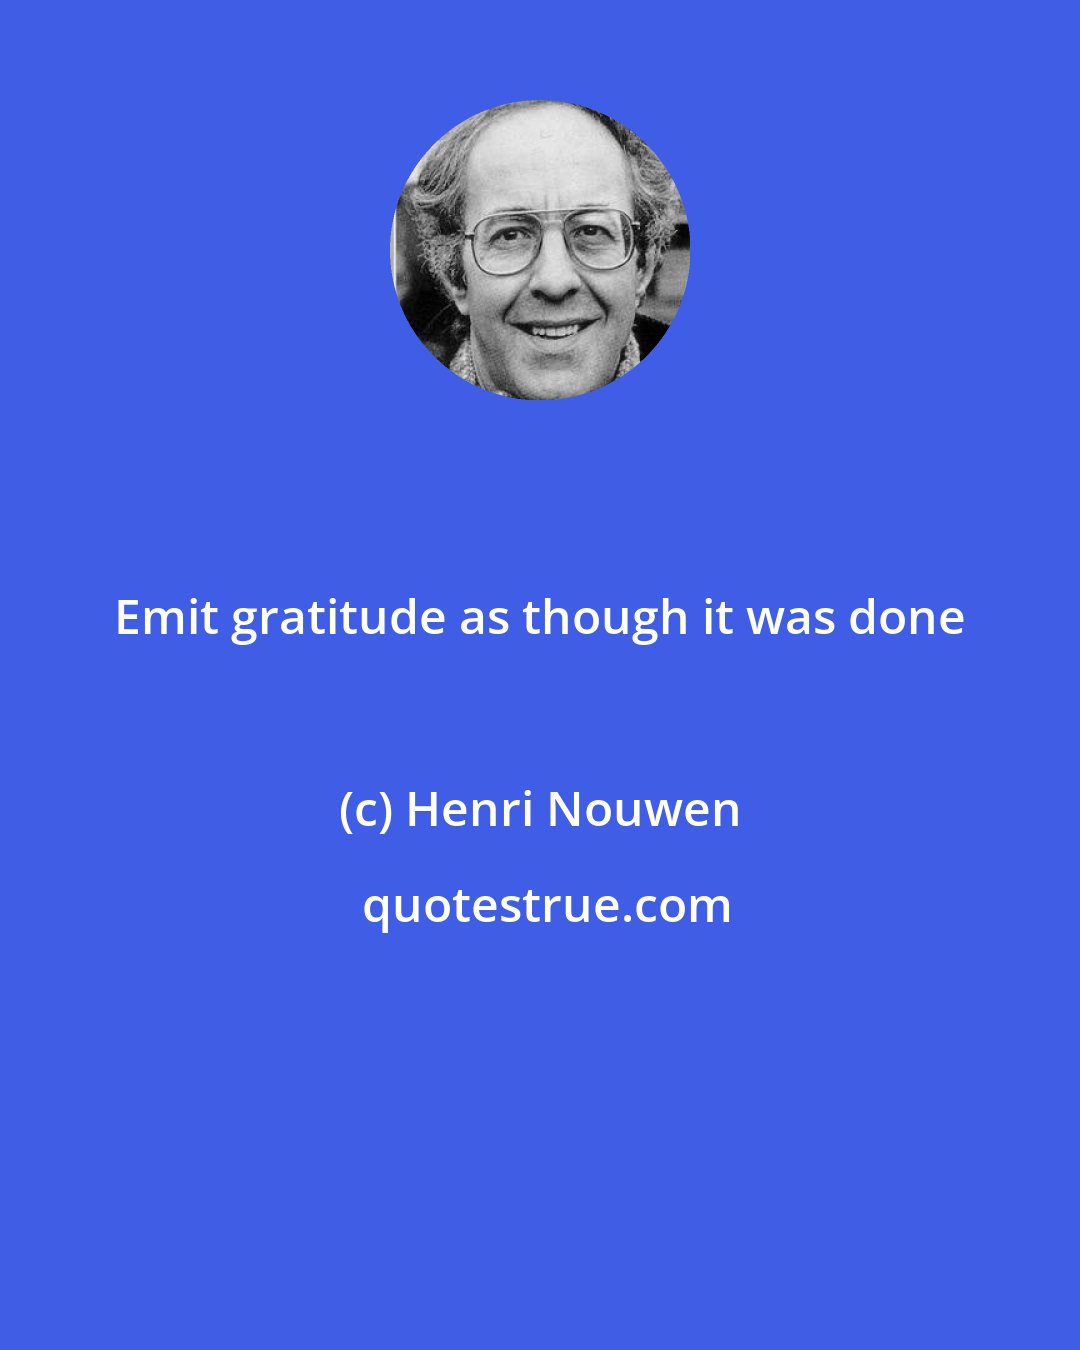 Henri Nouwen: Emit gratitude as though it was done